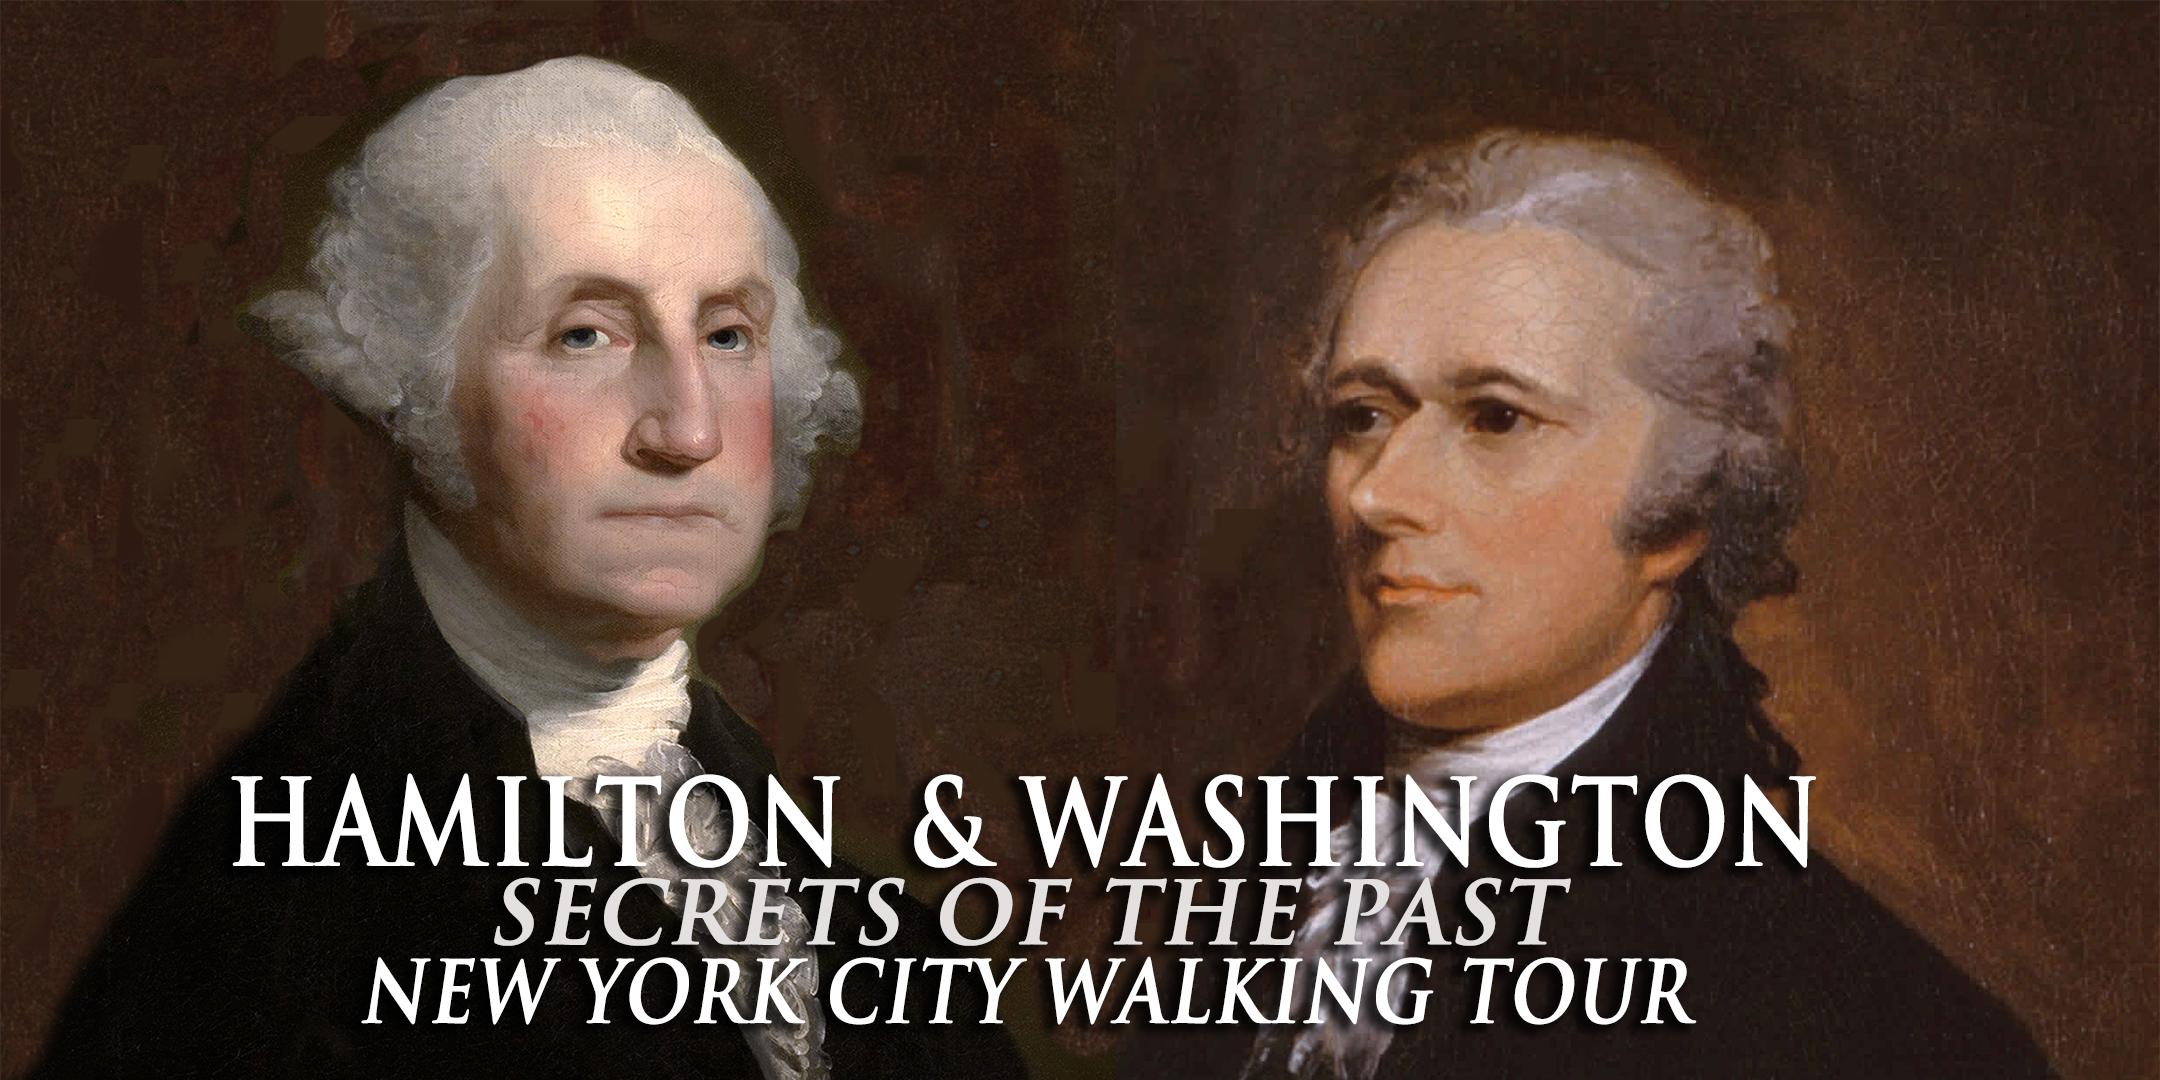 Hamilton and Washington New York City Walking Tour Secrets of the Past